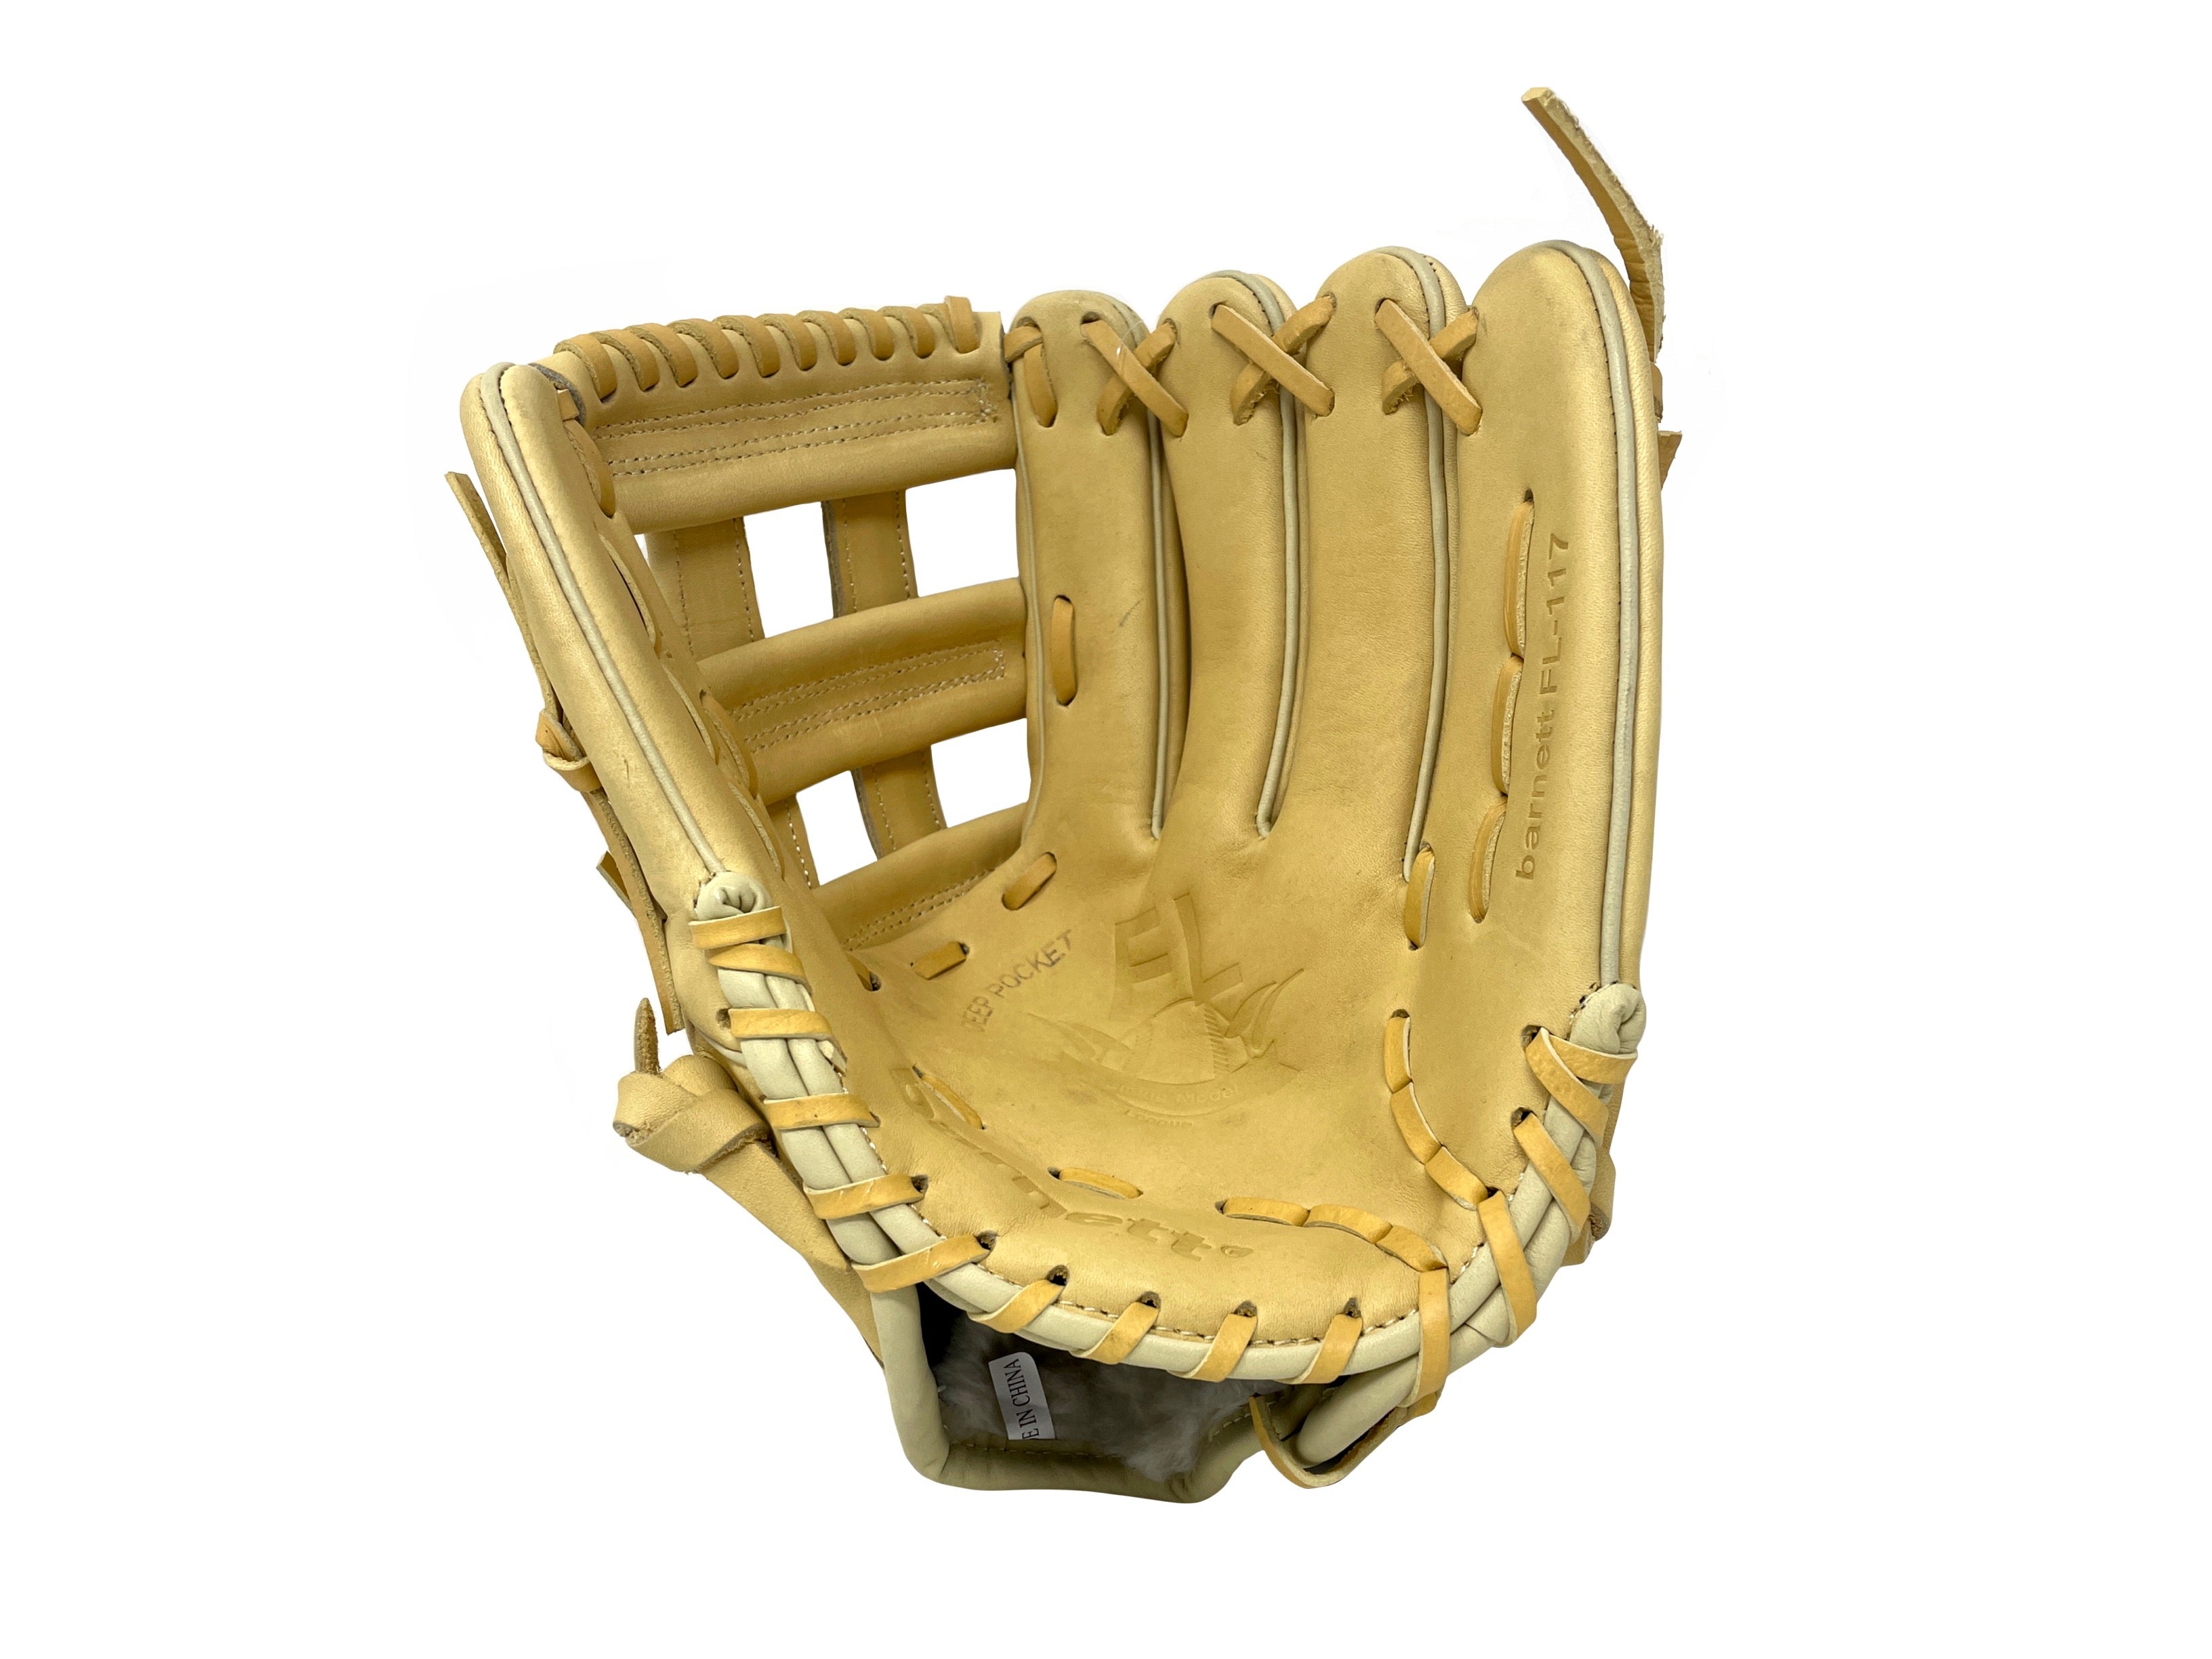 FL-117 high quality baseball and softball glove, leather, infield